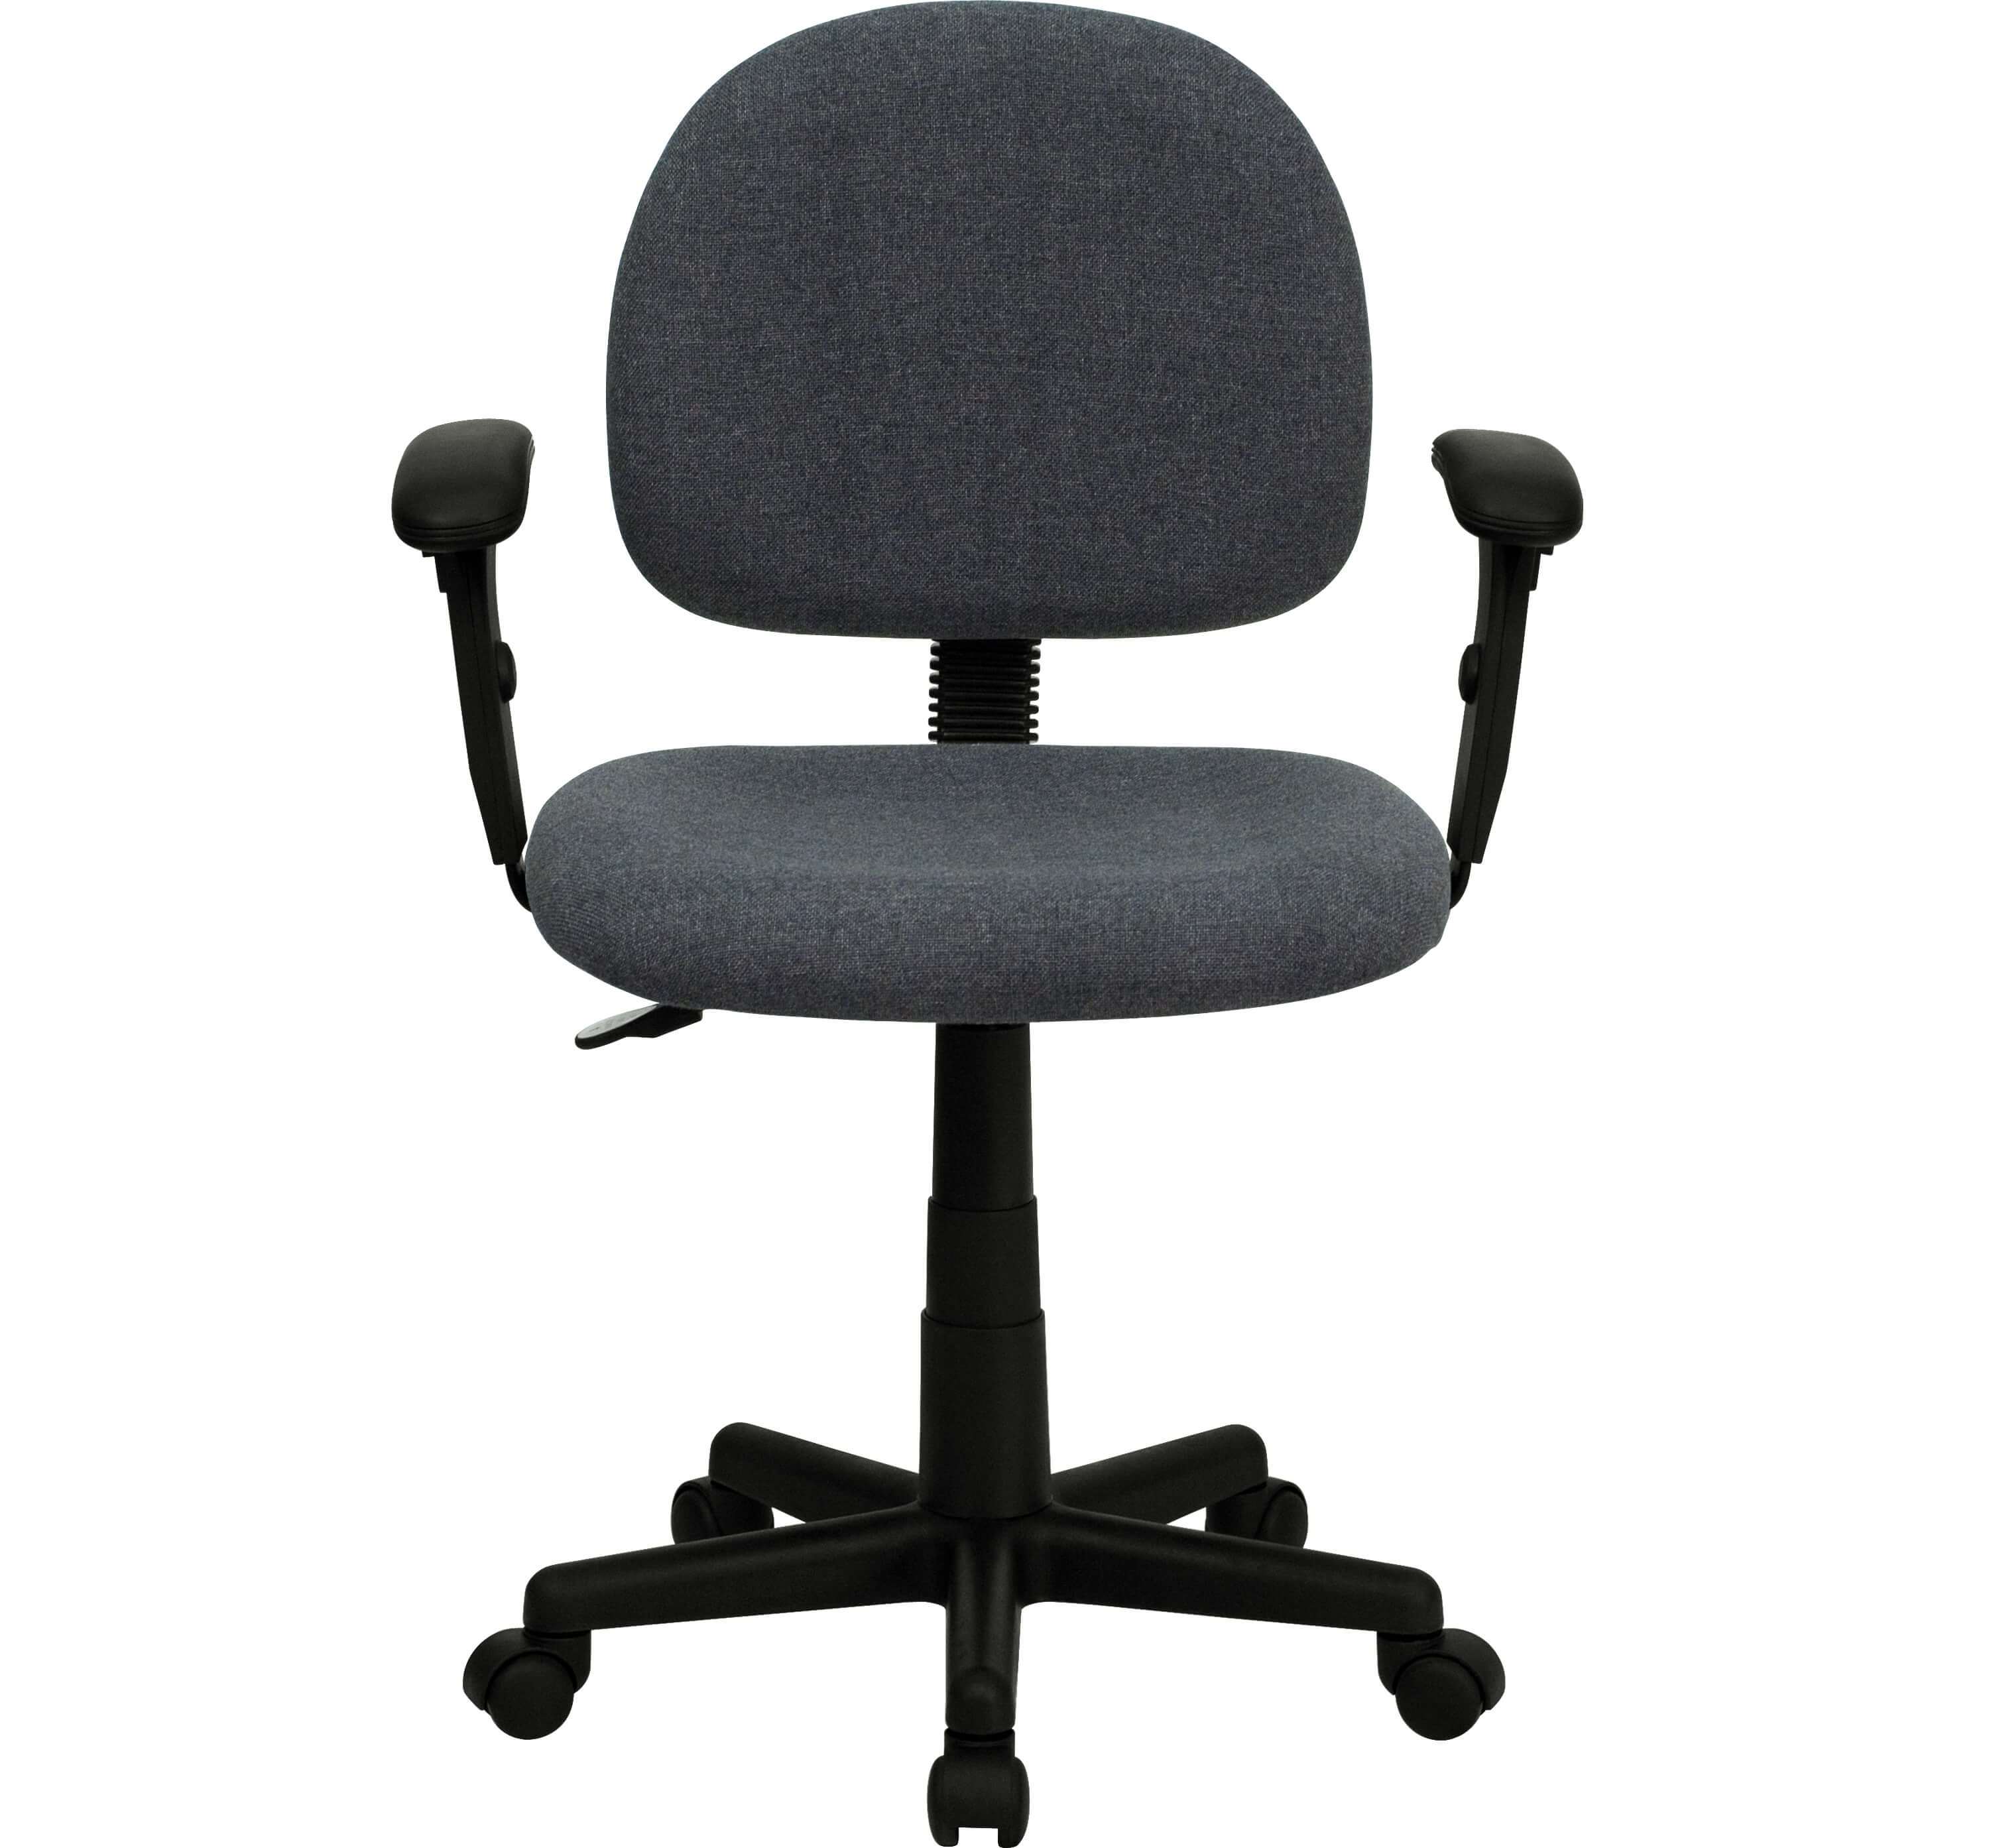 Cool desk chairs CUB BT 660 1 GY GG FLA